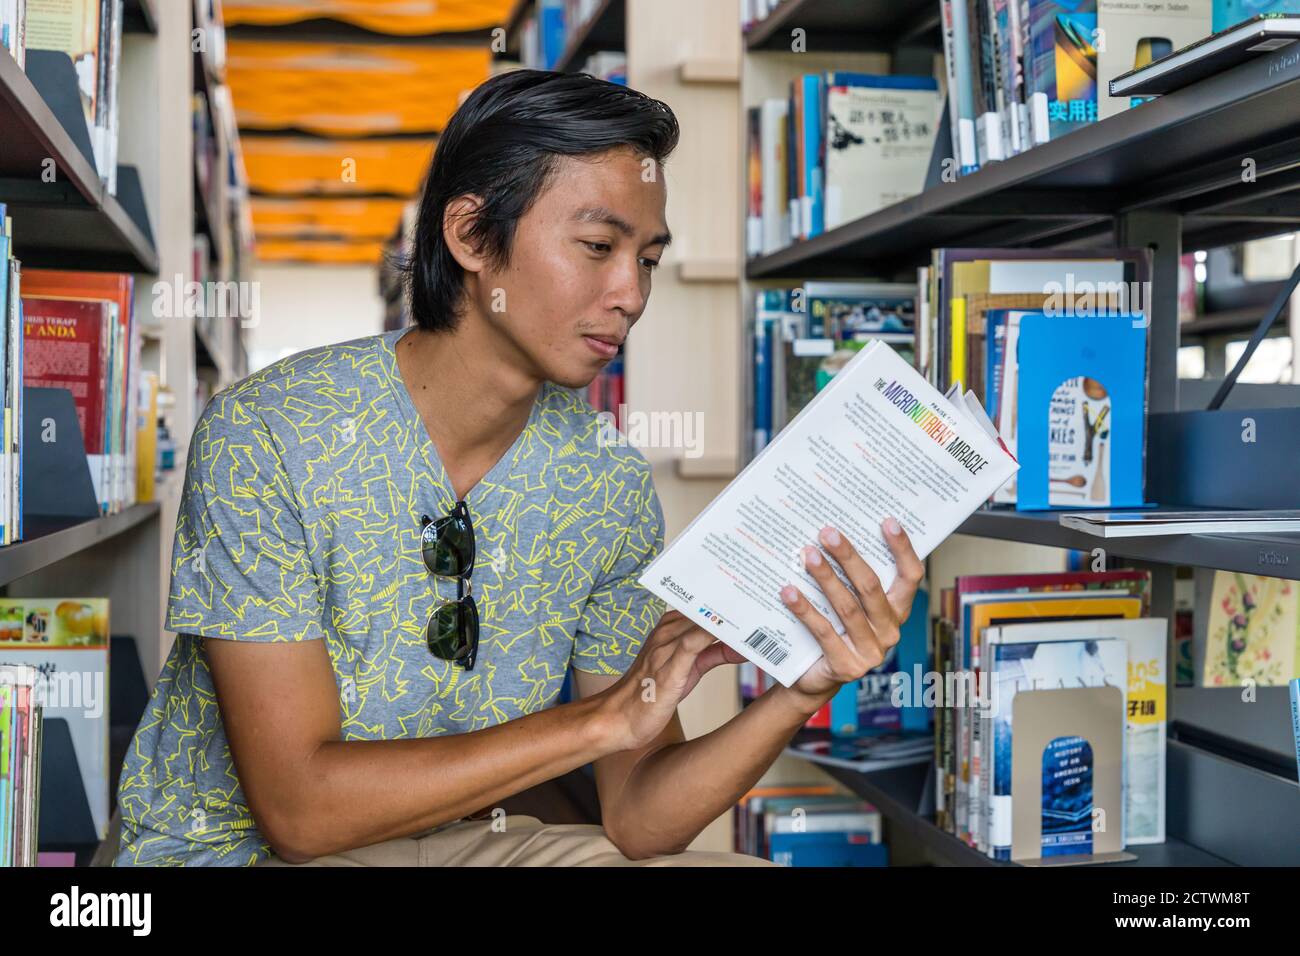 A young man, sitting between the bookshelves and reading a book in the Sabah Regional Library at Tanjung Aru Plaza, Sabah, Kota Kinabalu, Malaysia. Stock Photo